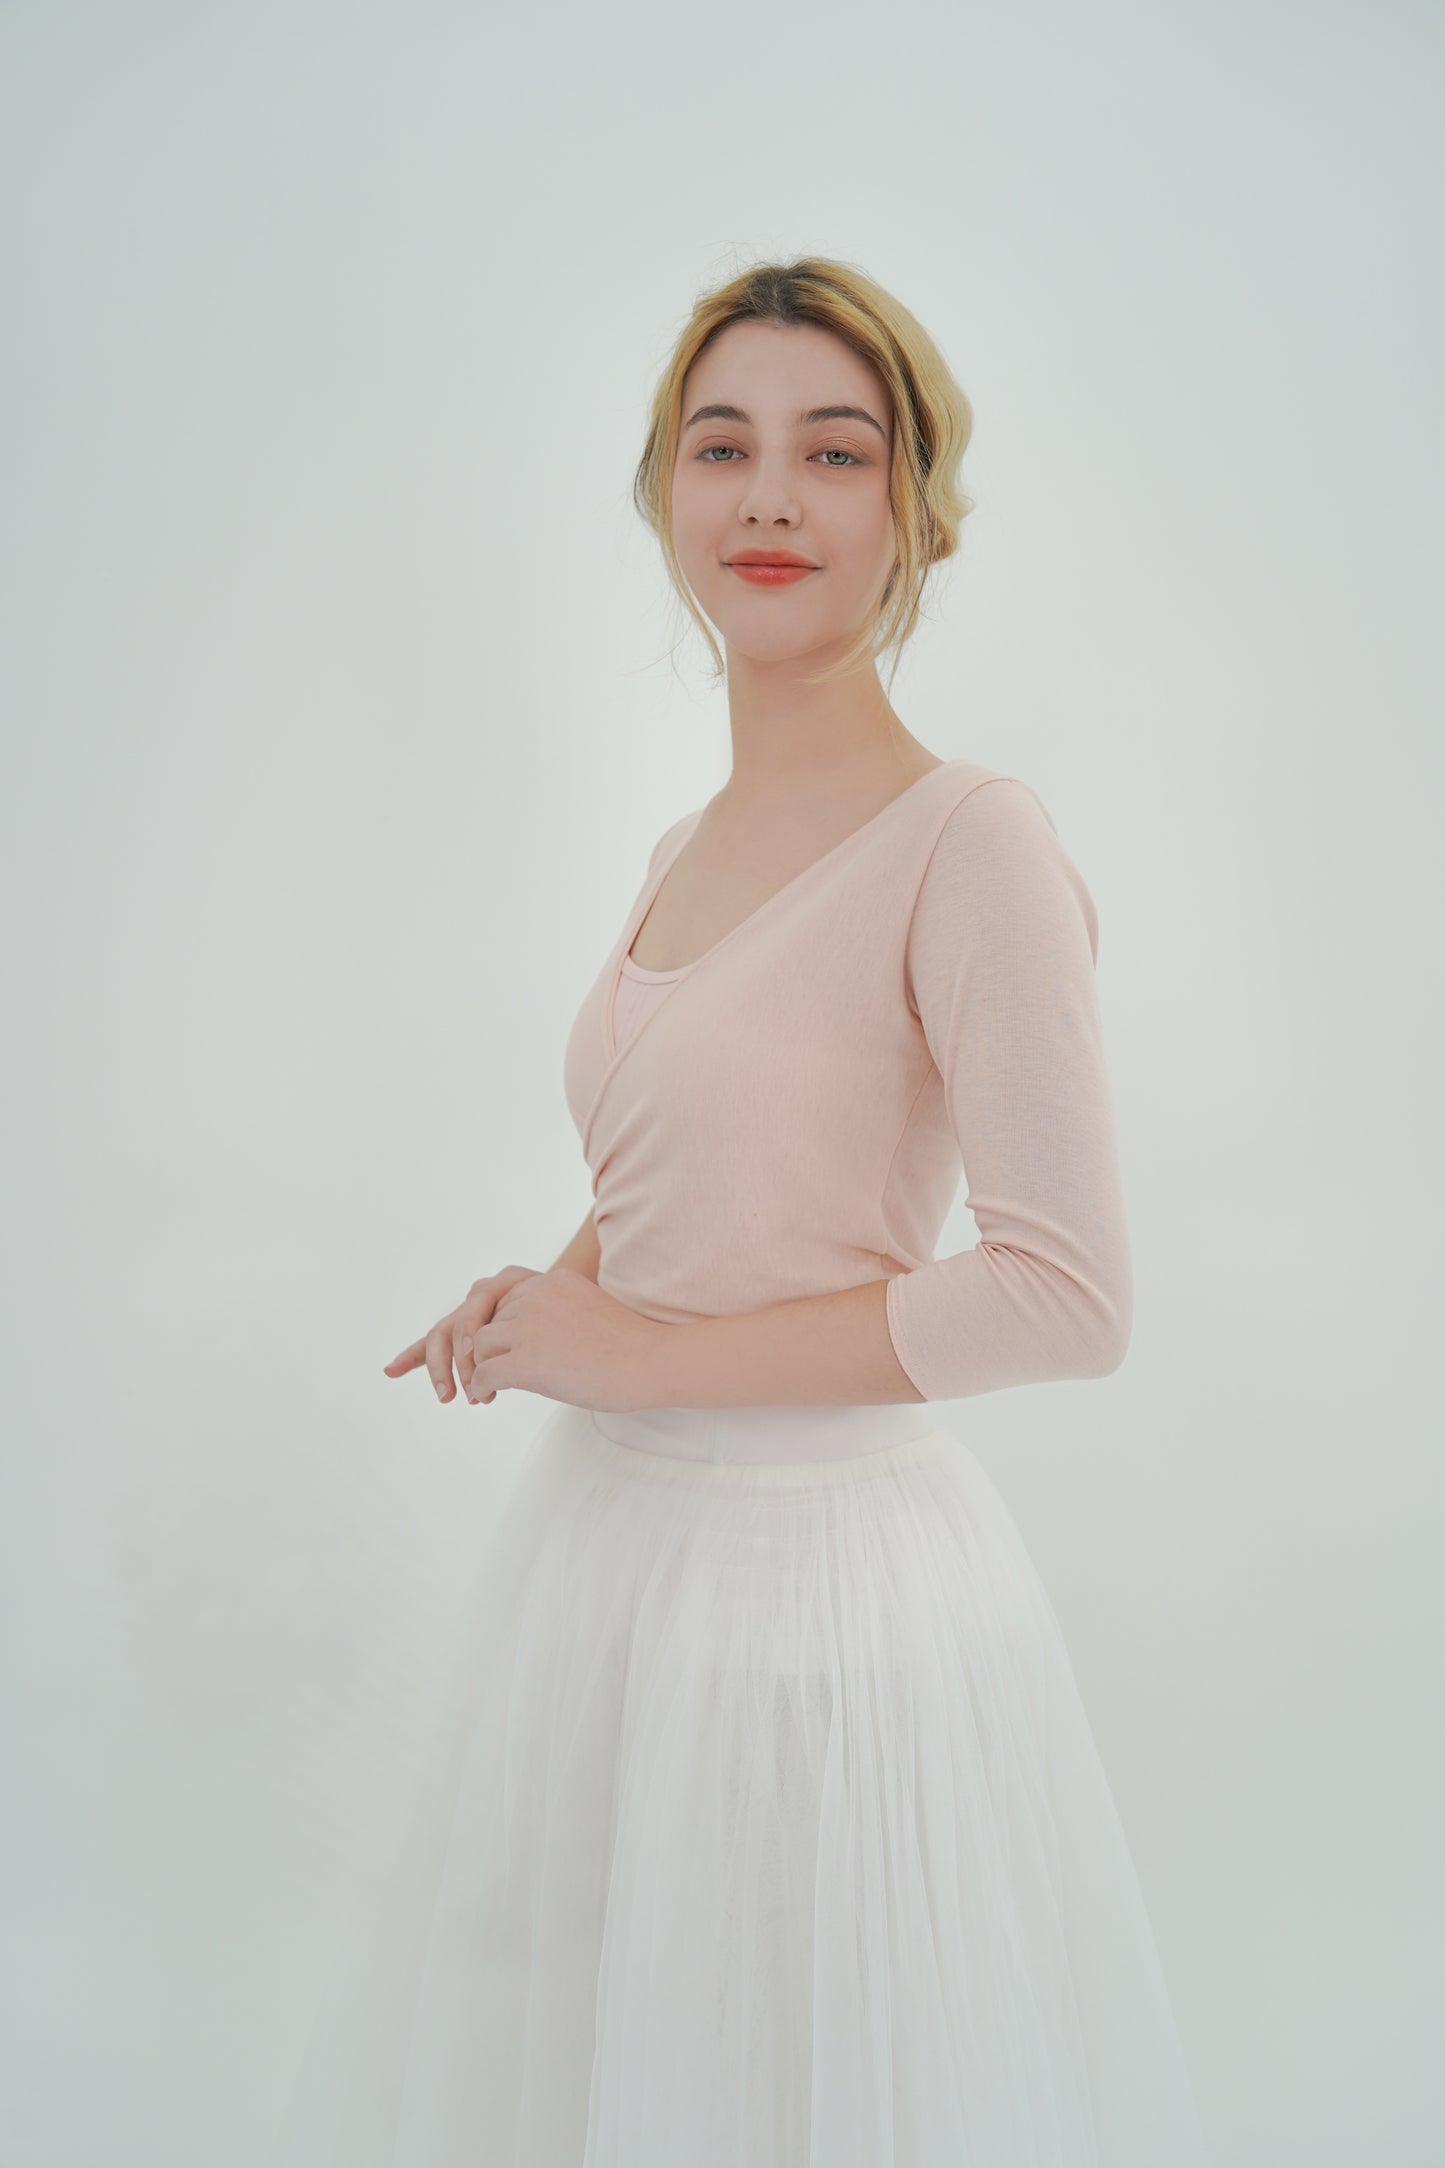 Romantic Tutu Skirt in swan white